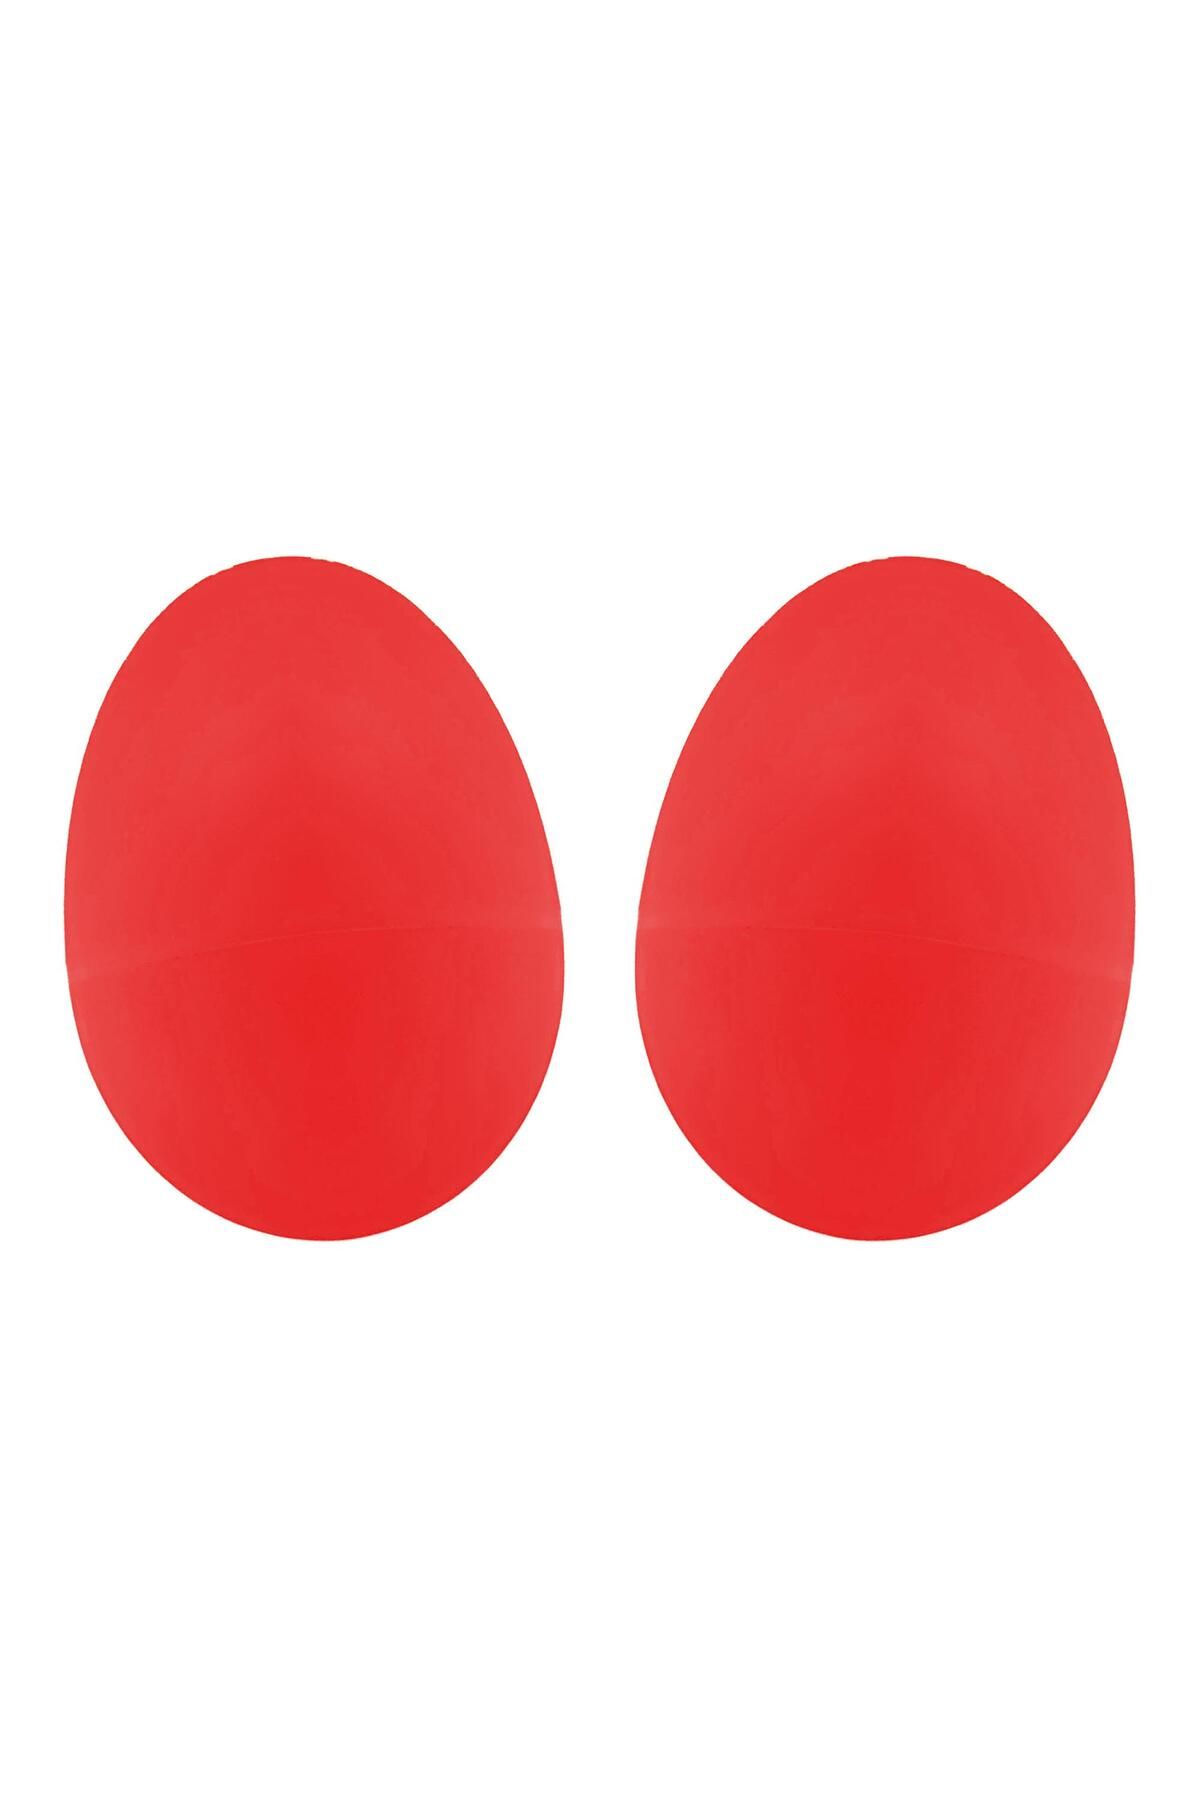 JWIN Pe-102 Yumurta Marakaş Orff - Ritim Aleti Seti - Kırmızı